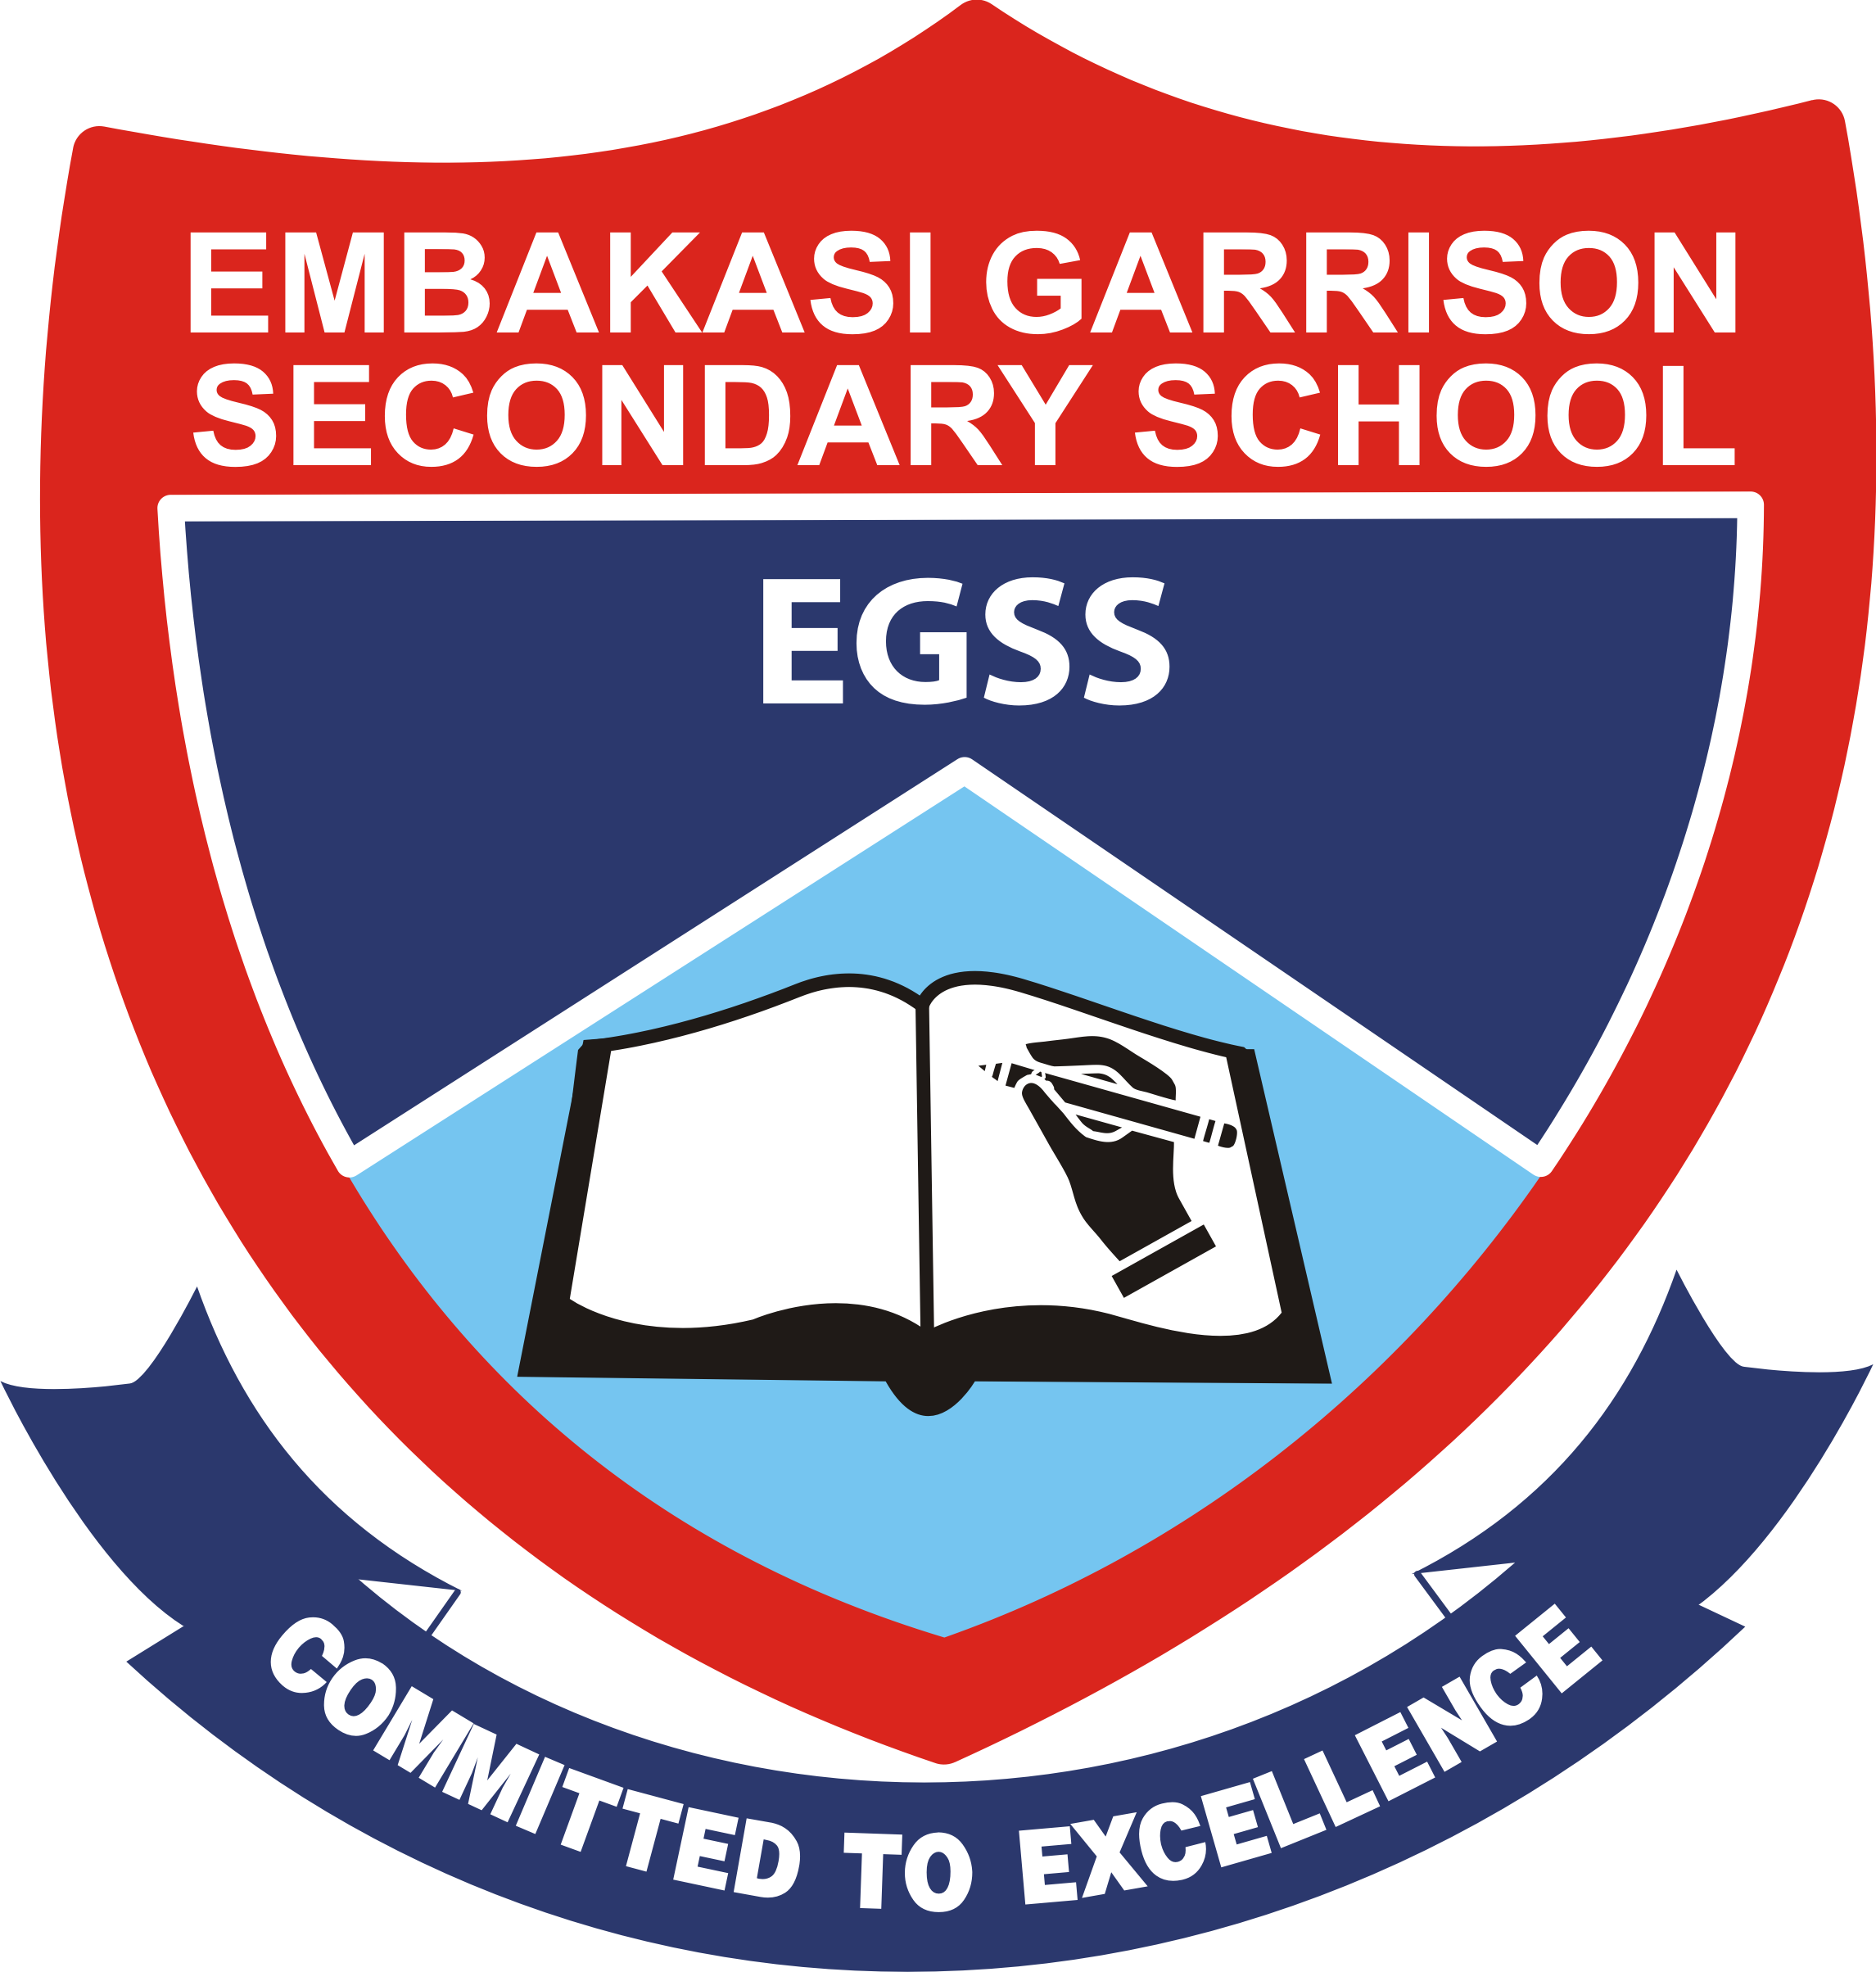 Embakasi Garrison Secondary School